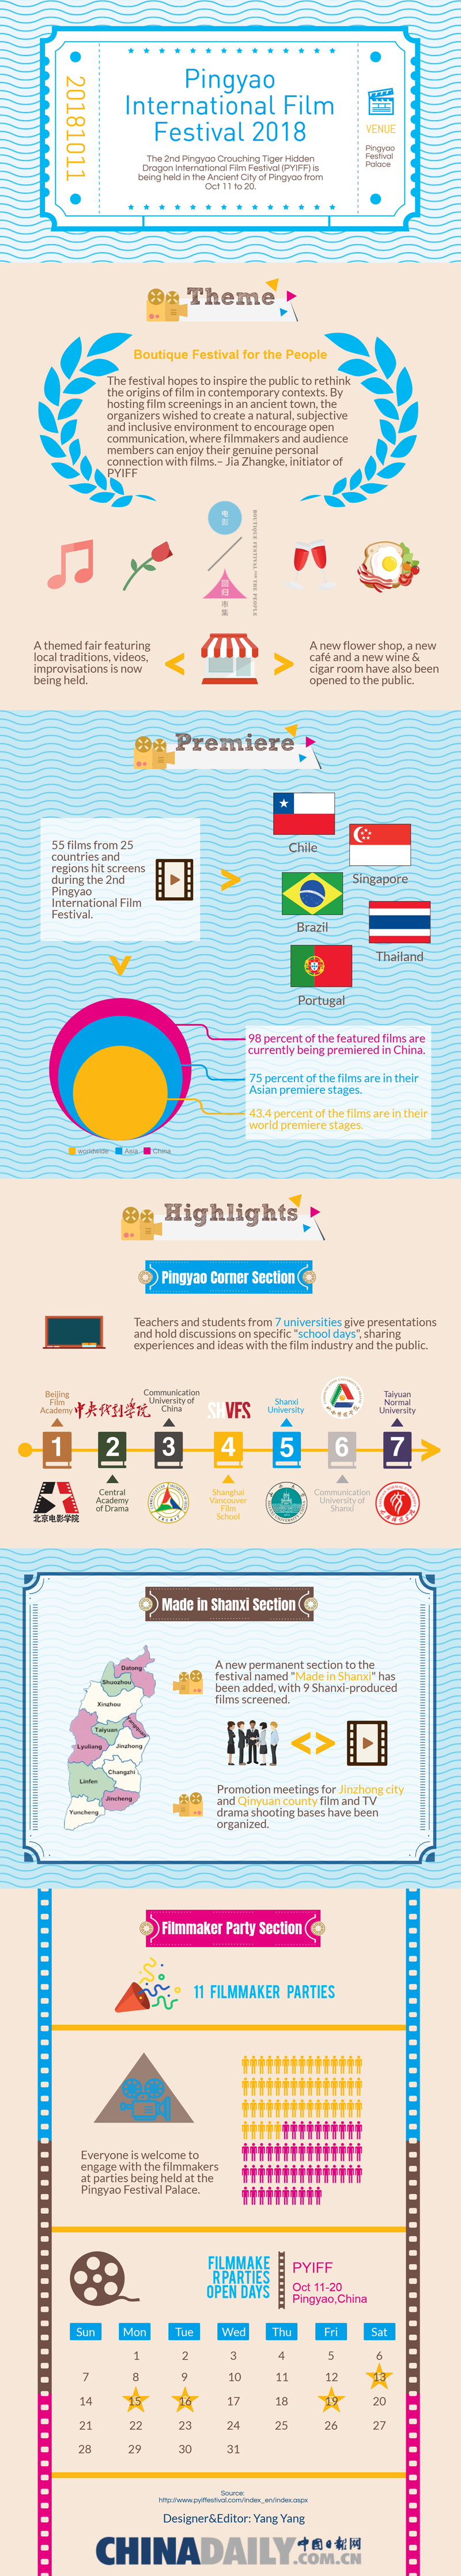 Infographic: 2nd Pingyao International Film Festival